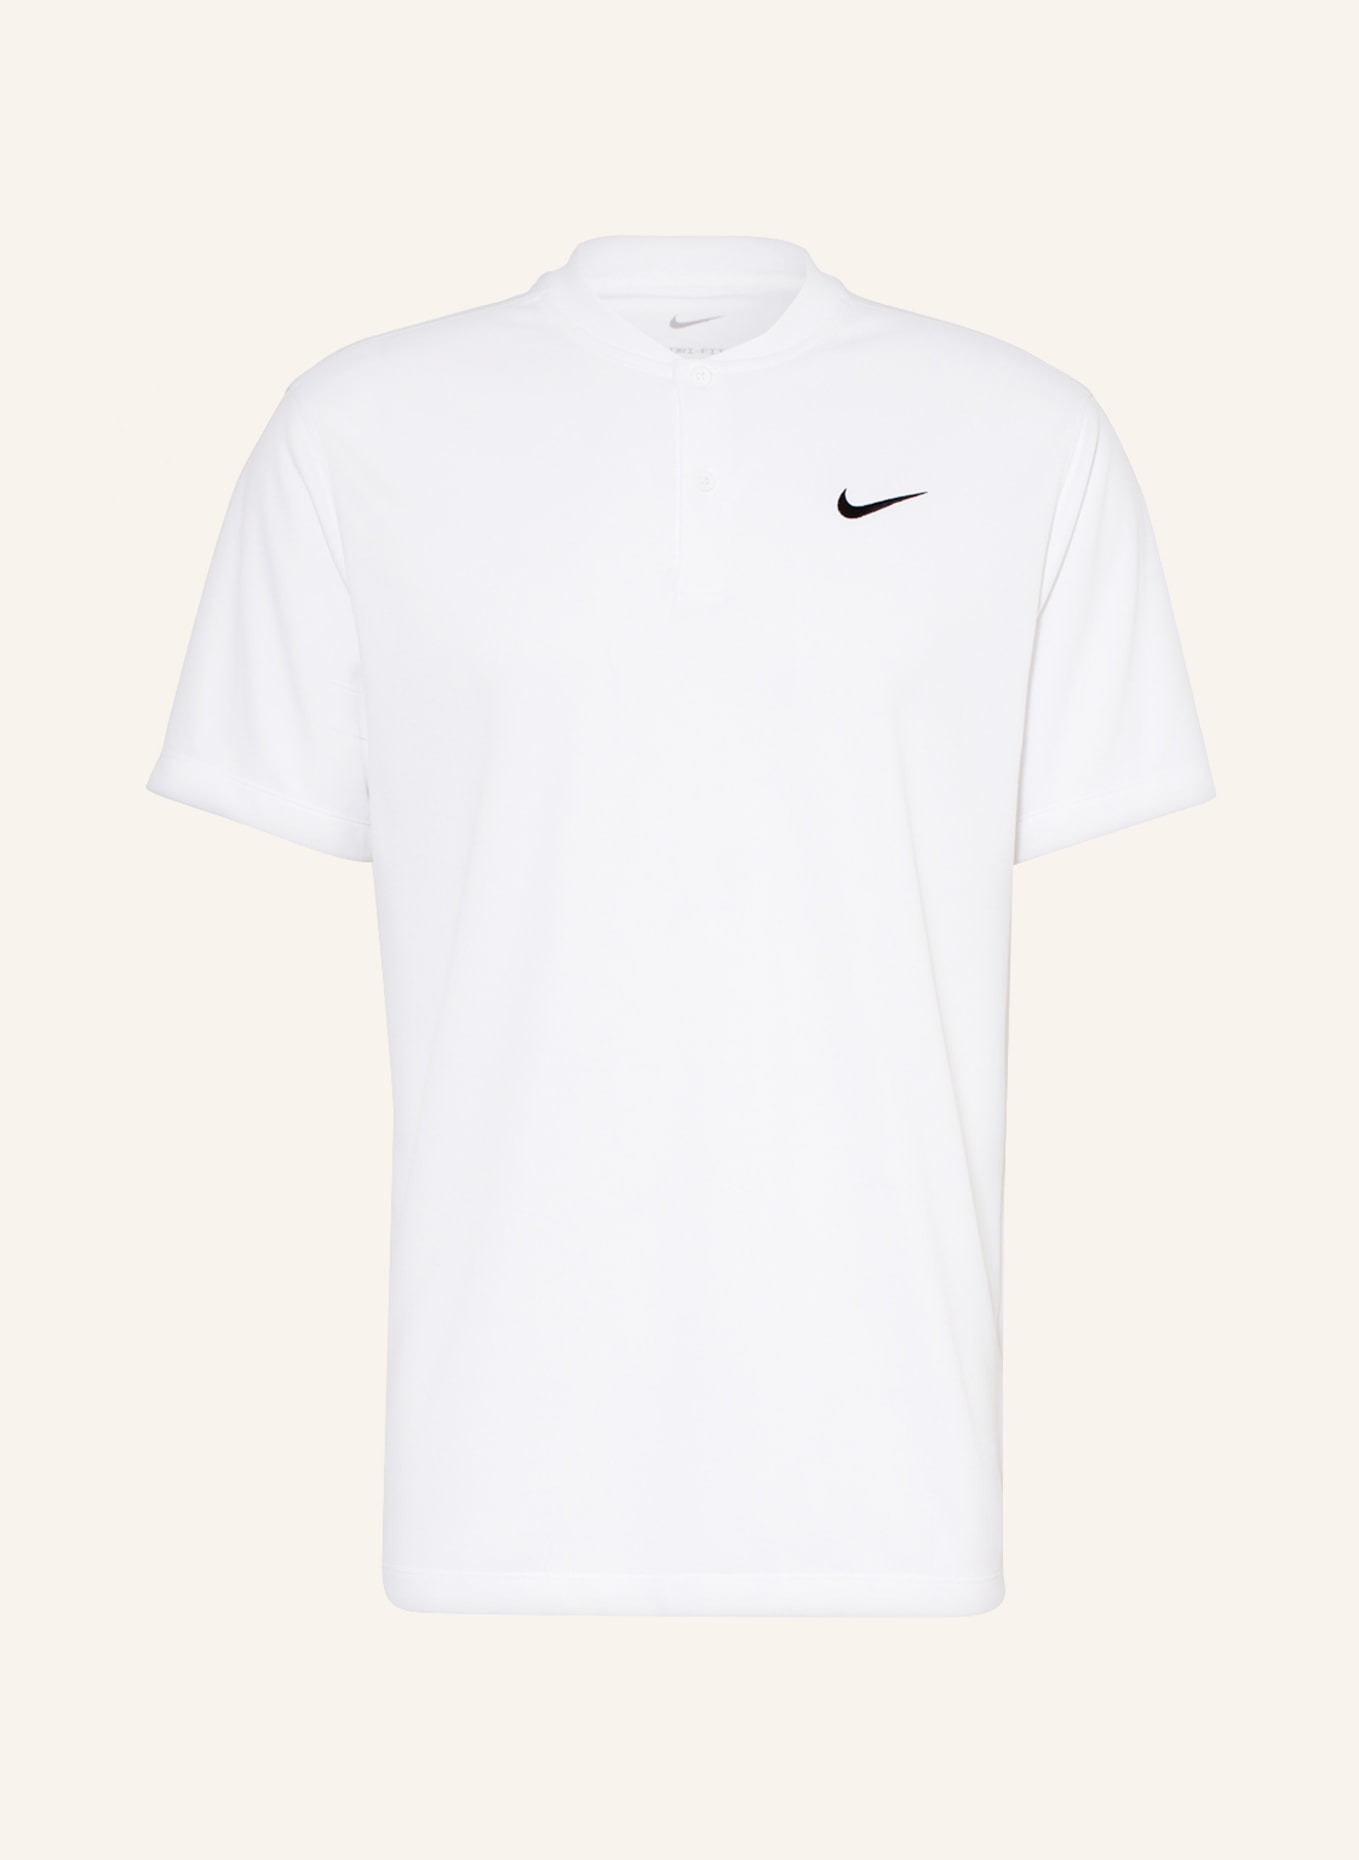 zonde Gevoel van schuld De lucht Nike Performance polo shirt COURT DRI-FIT in white